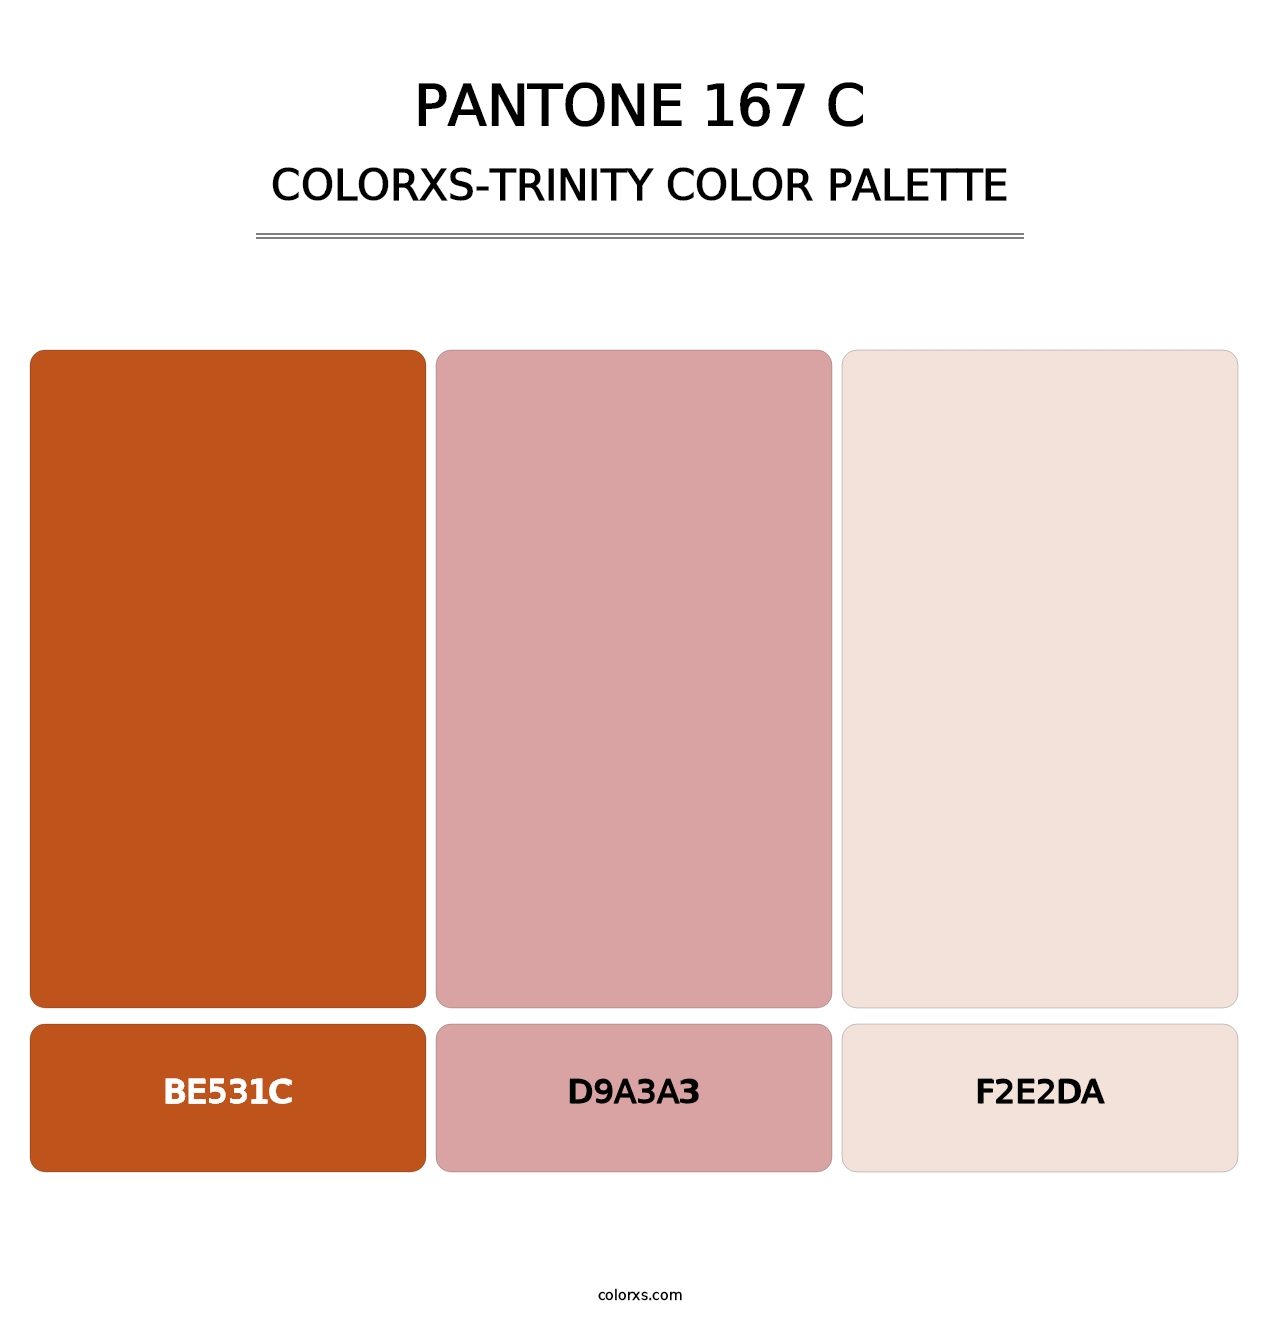 PANTONE 167 C - Colorxs Trinity Palette